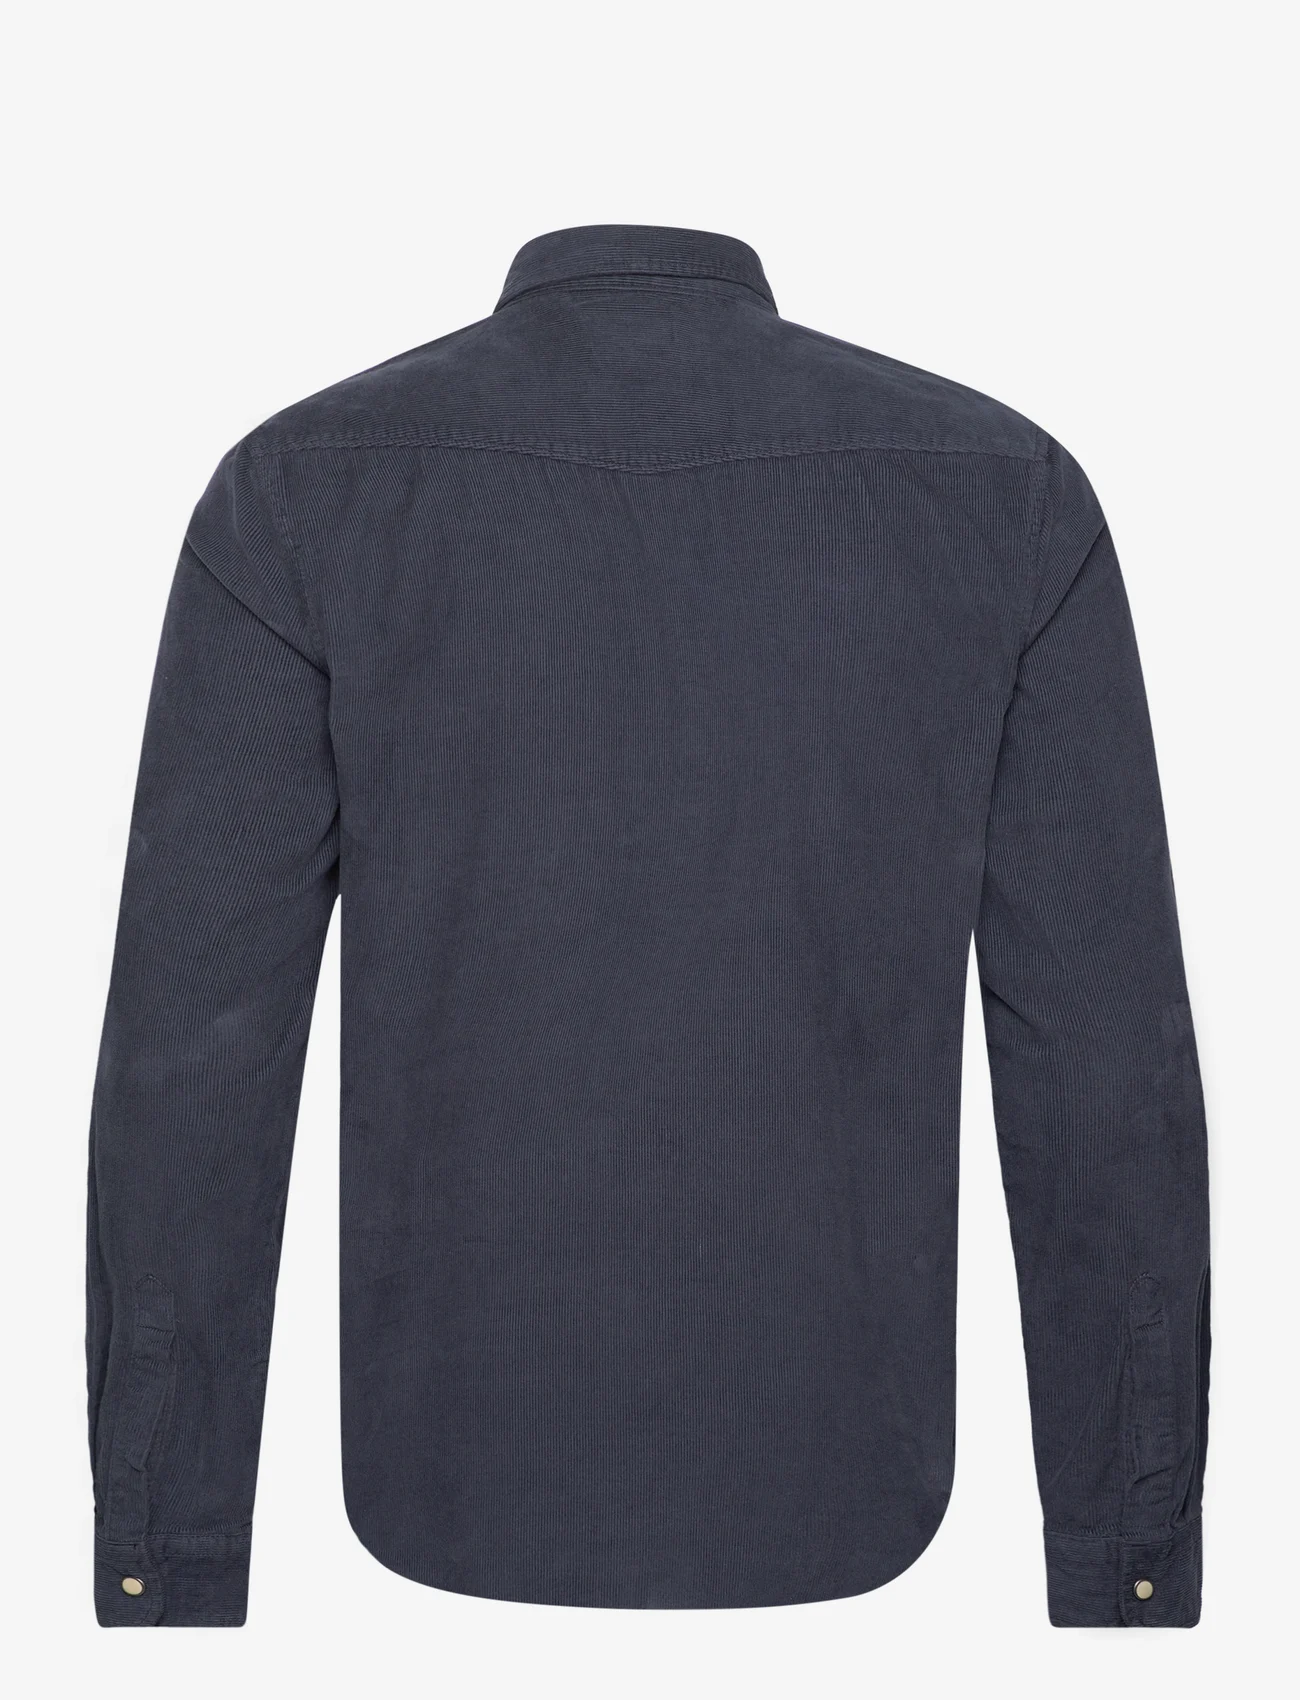 Superdry - VINTAGE CORD WESTERN SHIRT - casual skjorter - eclipse navy - 1